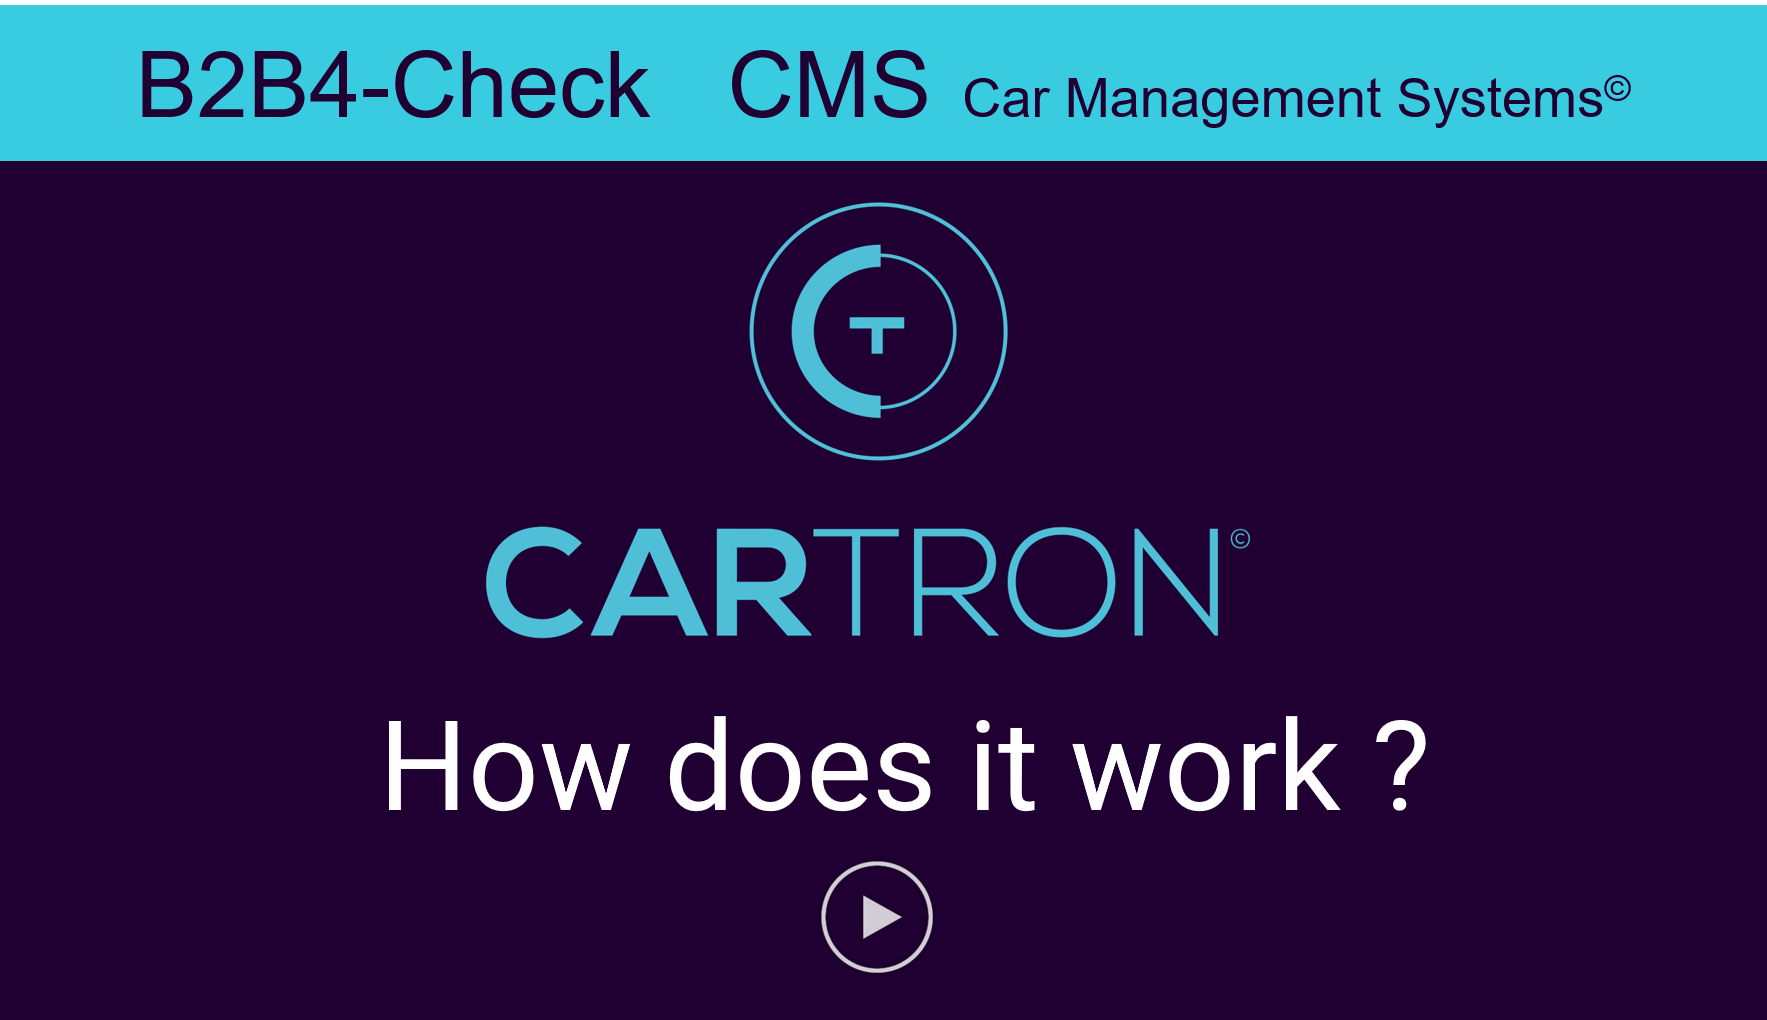 CARTRON How does it work - Video EN